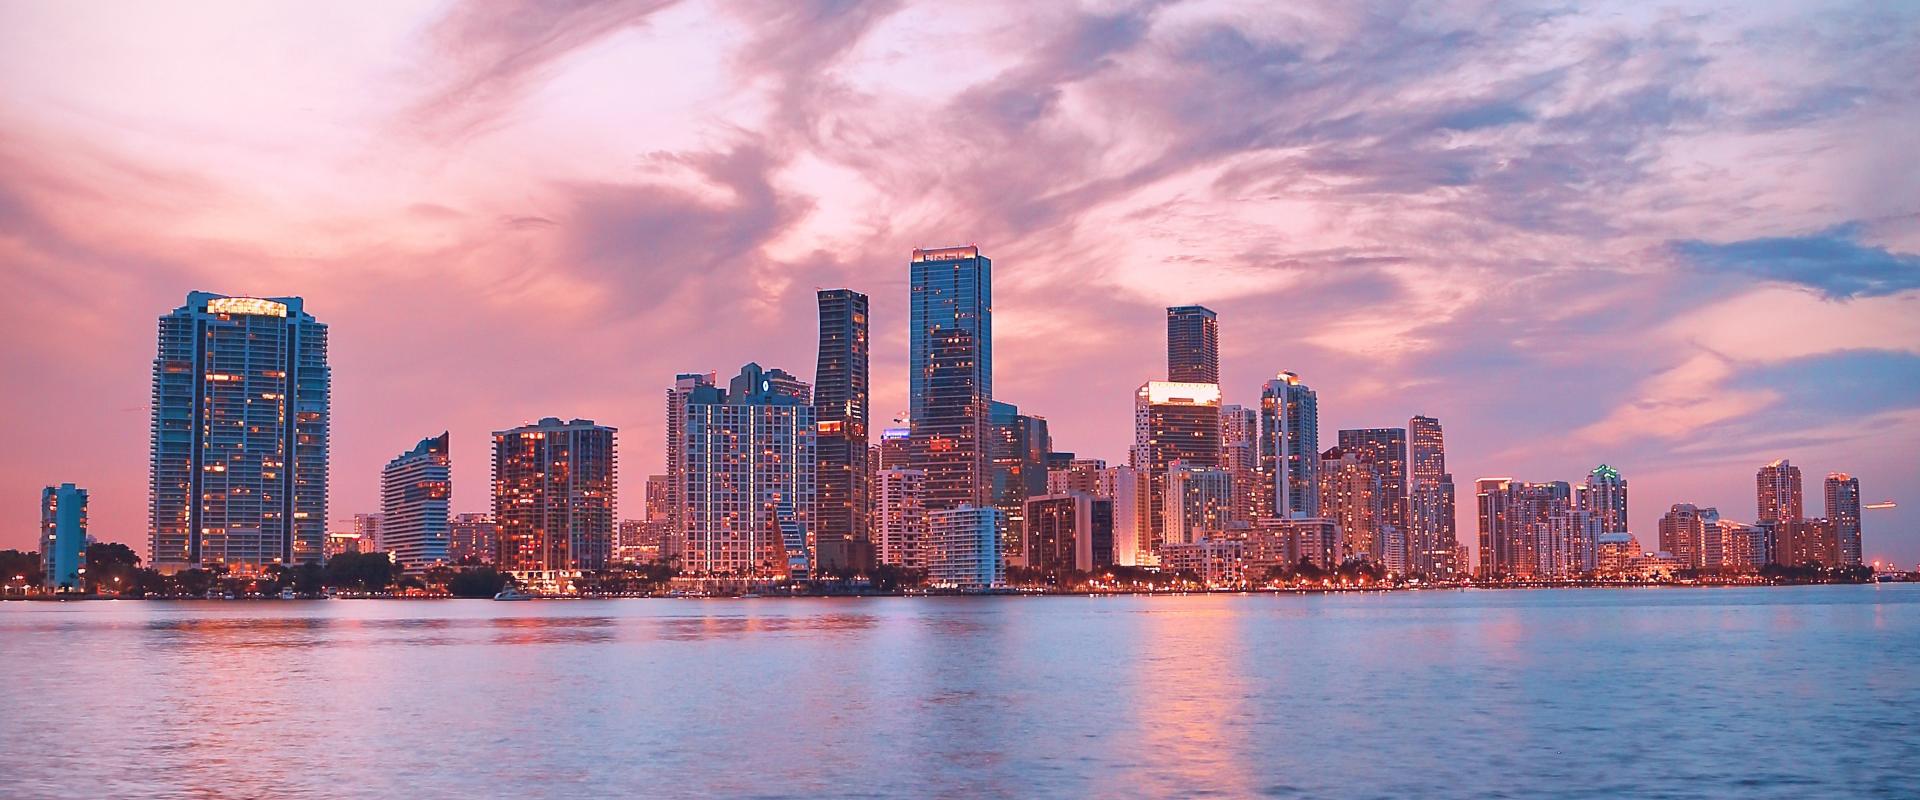 Photo of Miami skyline